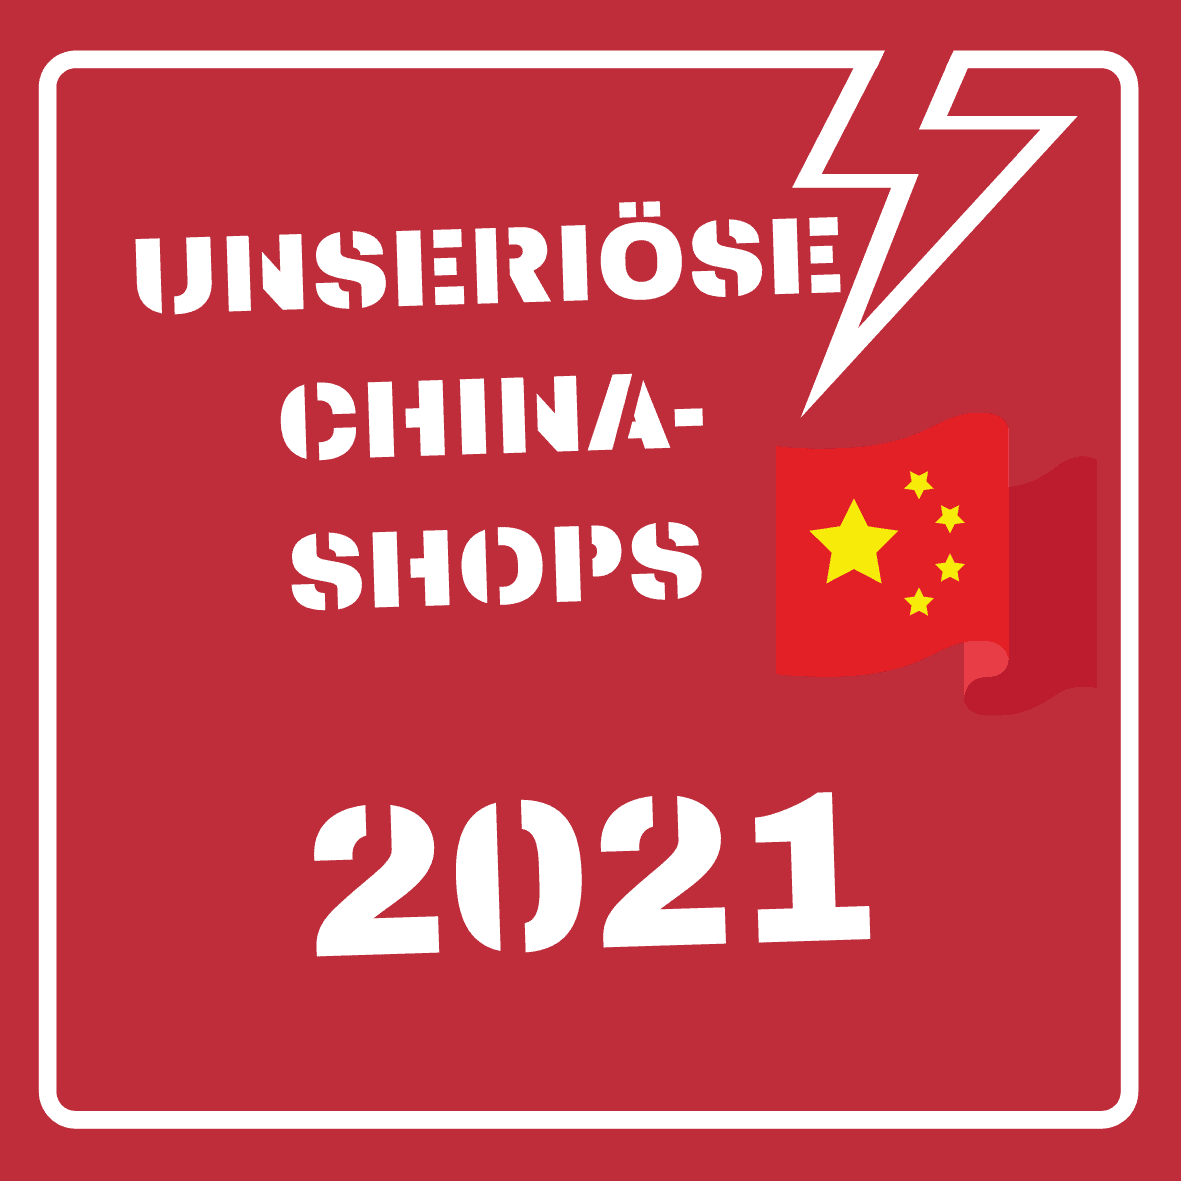 unserioese china shops 2021